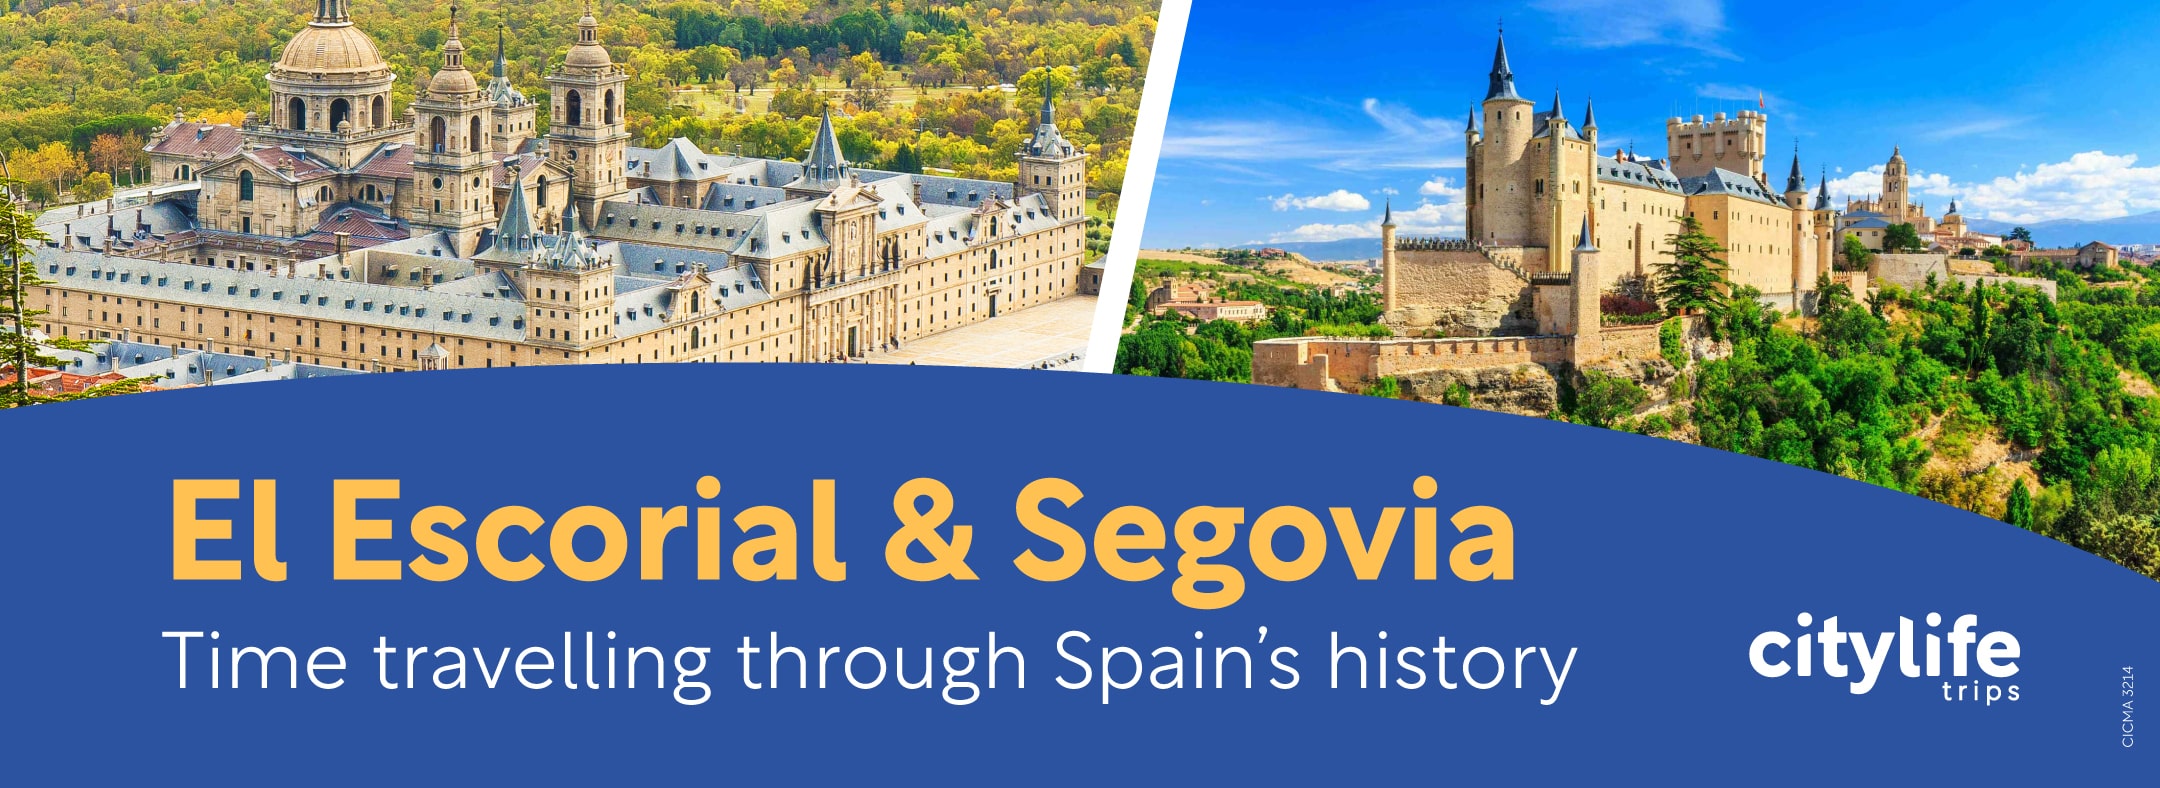 web-banner-el-escorial-and-segovia-citylife-madrid-trips